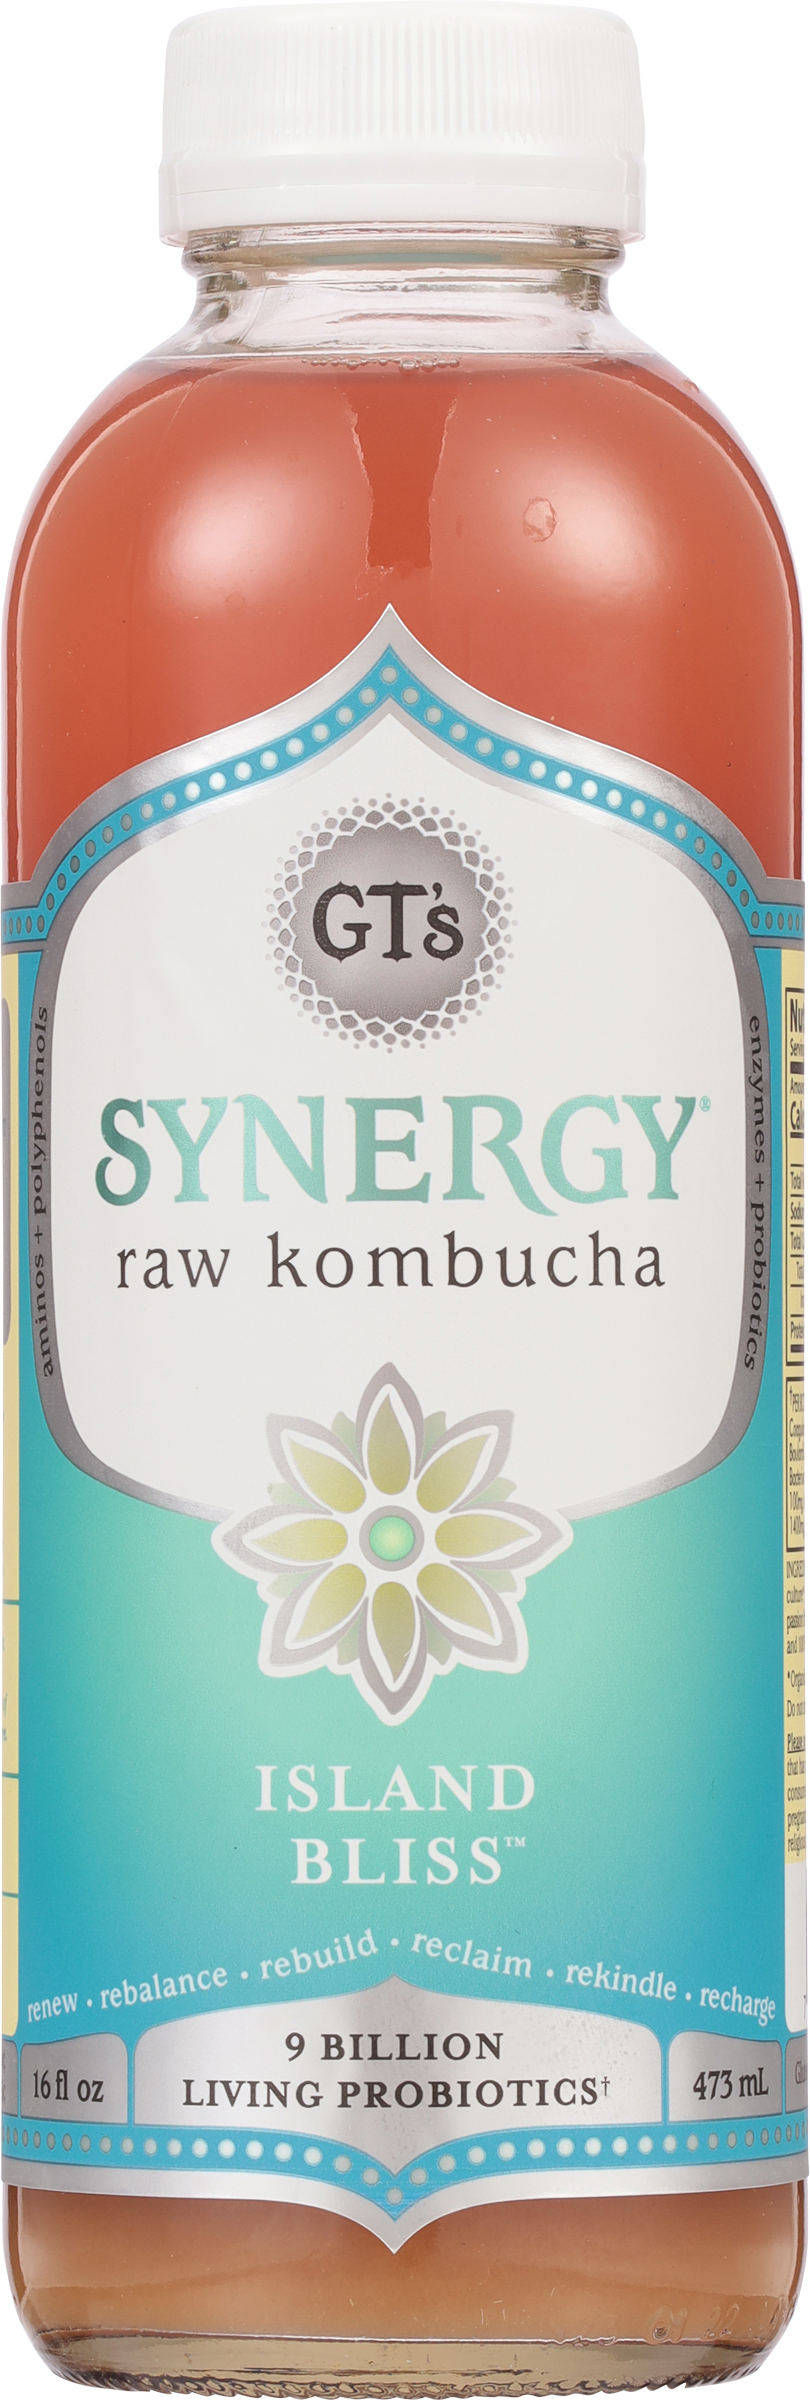 GT's Synergy Kombucha Organic Island Bliss, Refrigerated, 16 fl oz - image 4 of 5